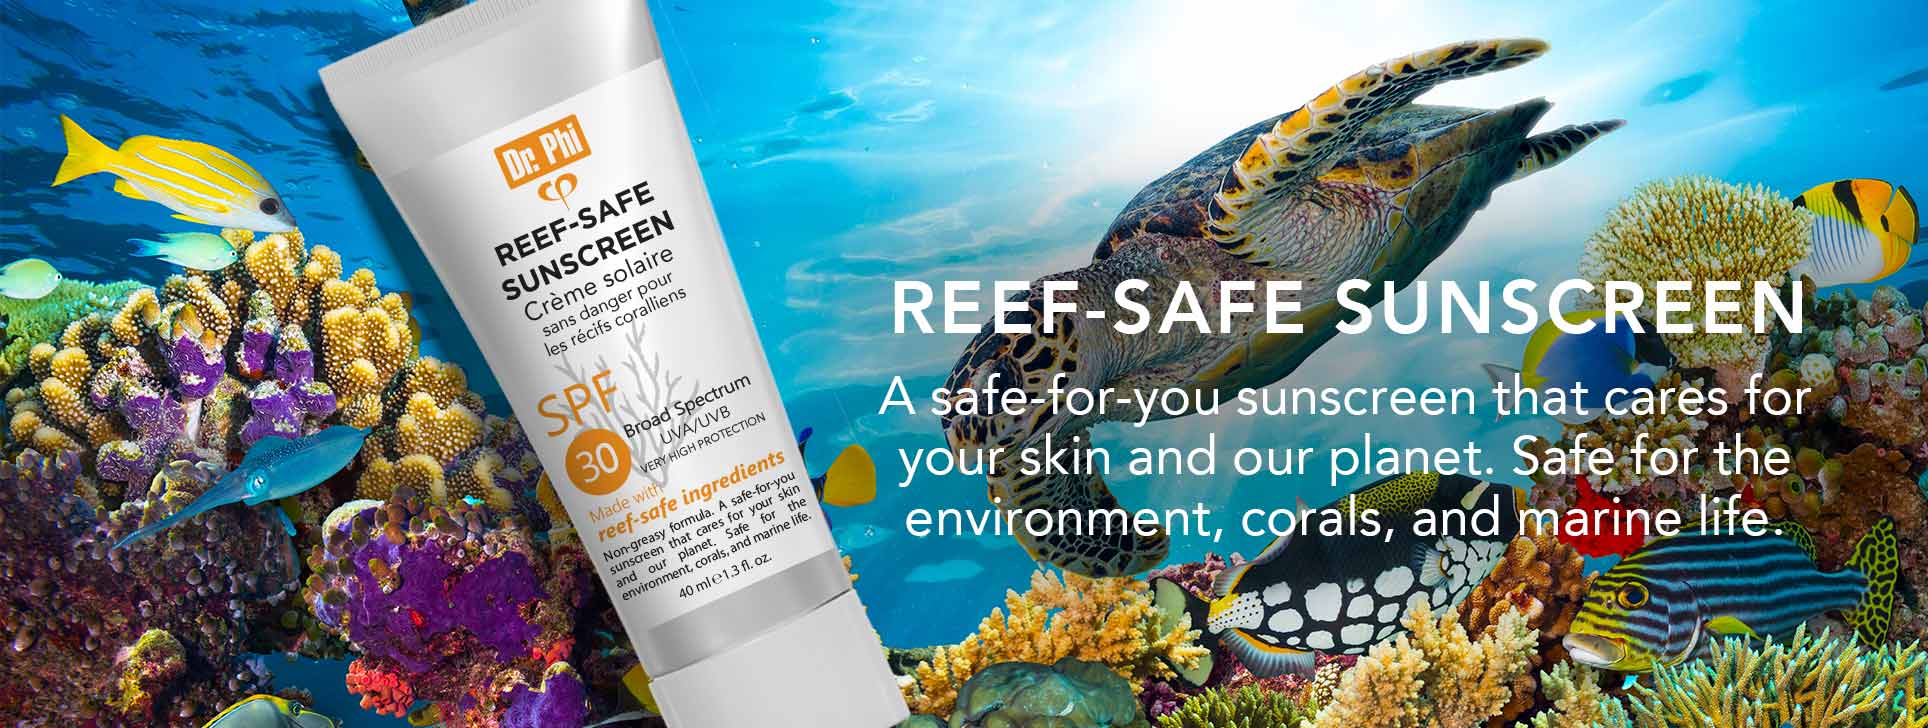 Dr--phi-reef-safe-sunscreen